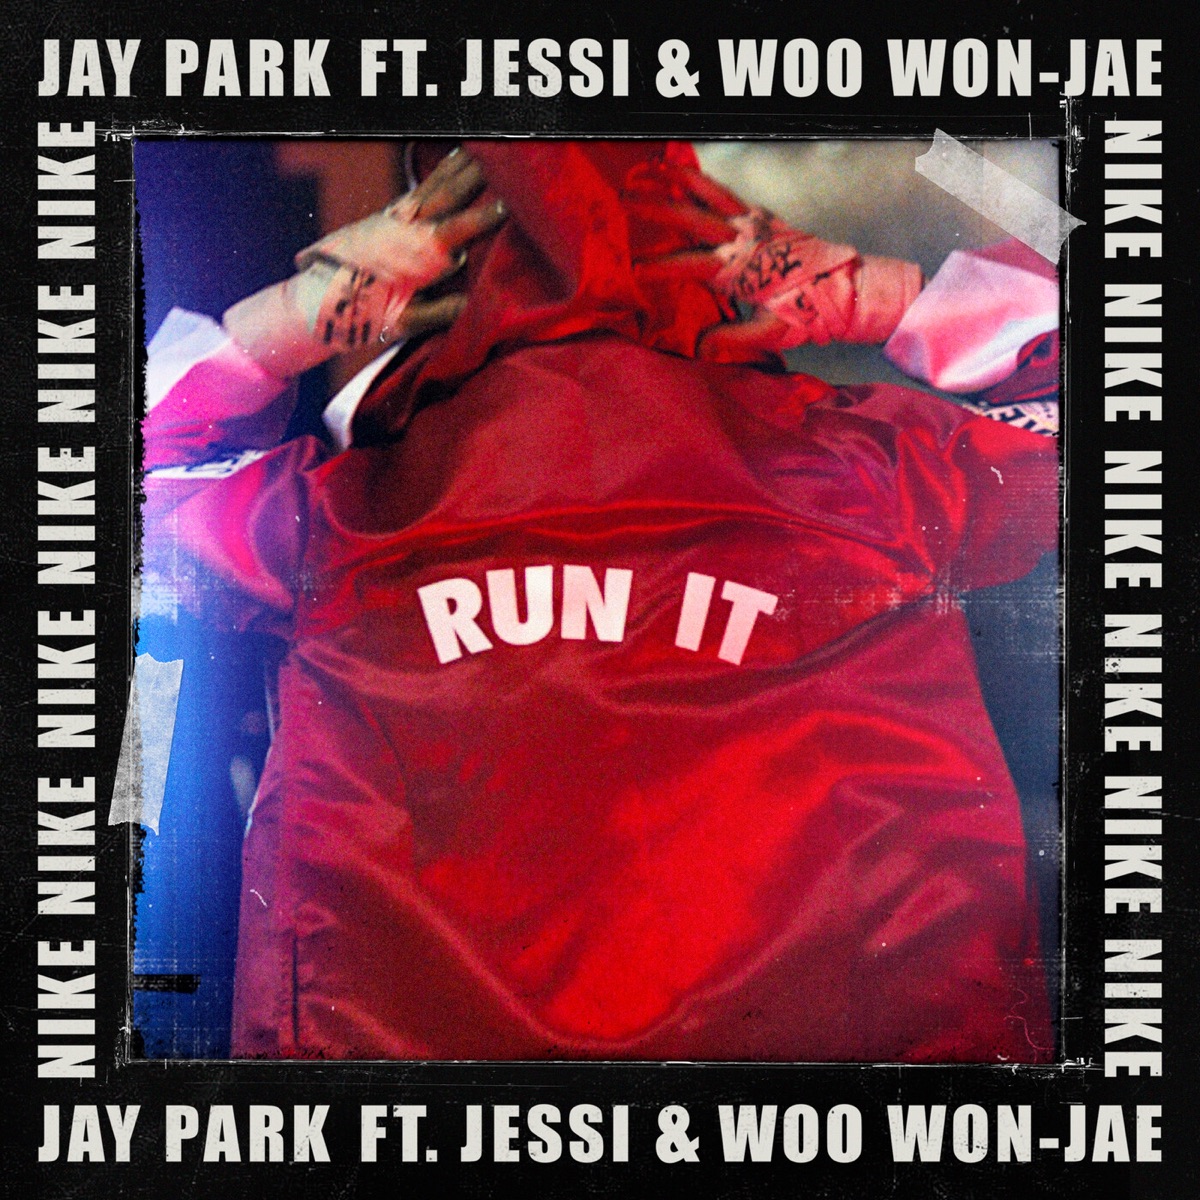 Jay Park – Run It (feat. Woo Won Jae, Jessi) (Prod. by Gray) – Single